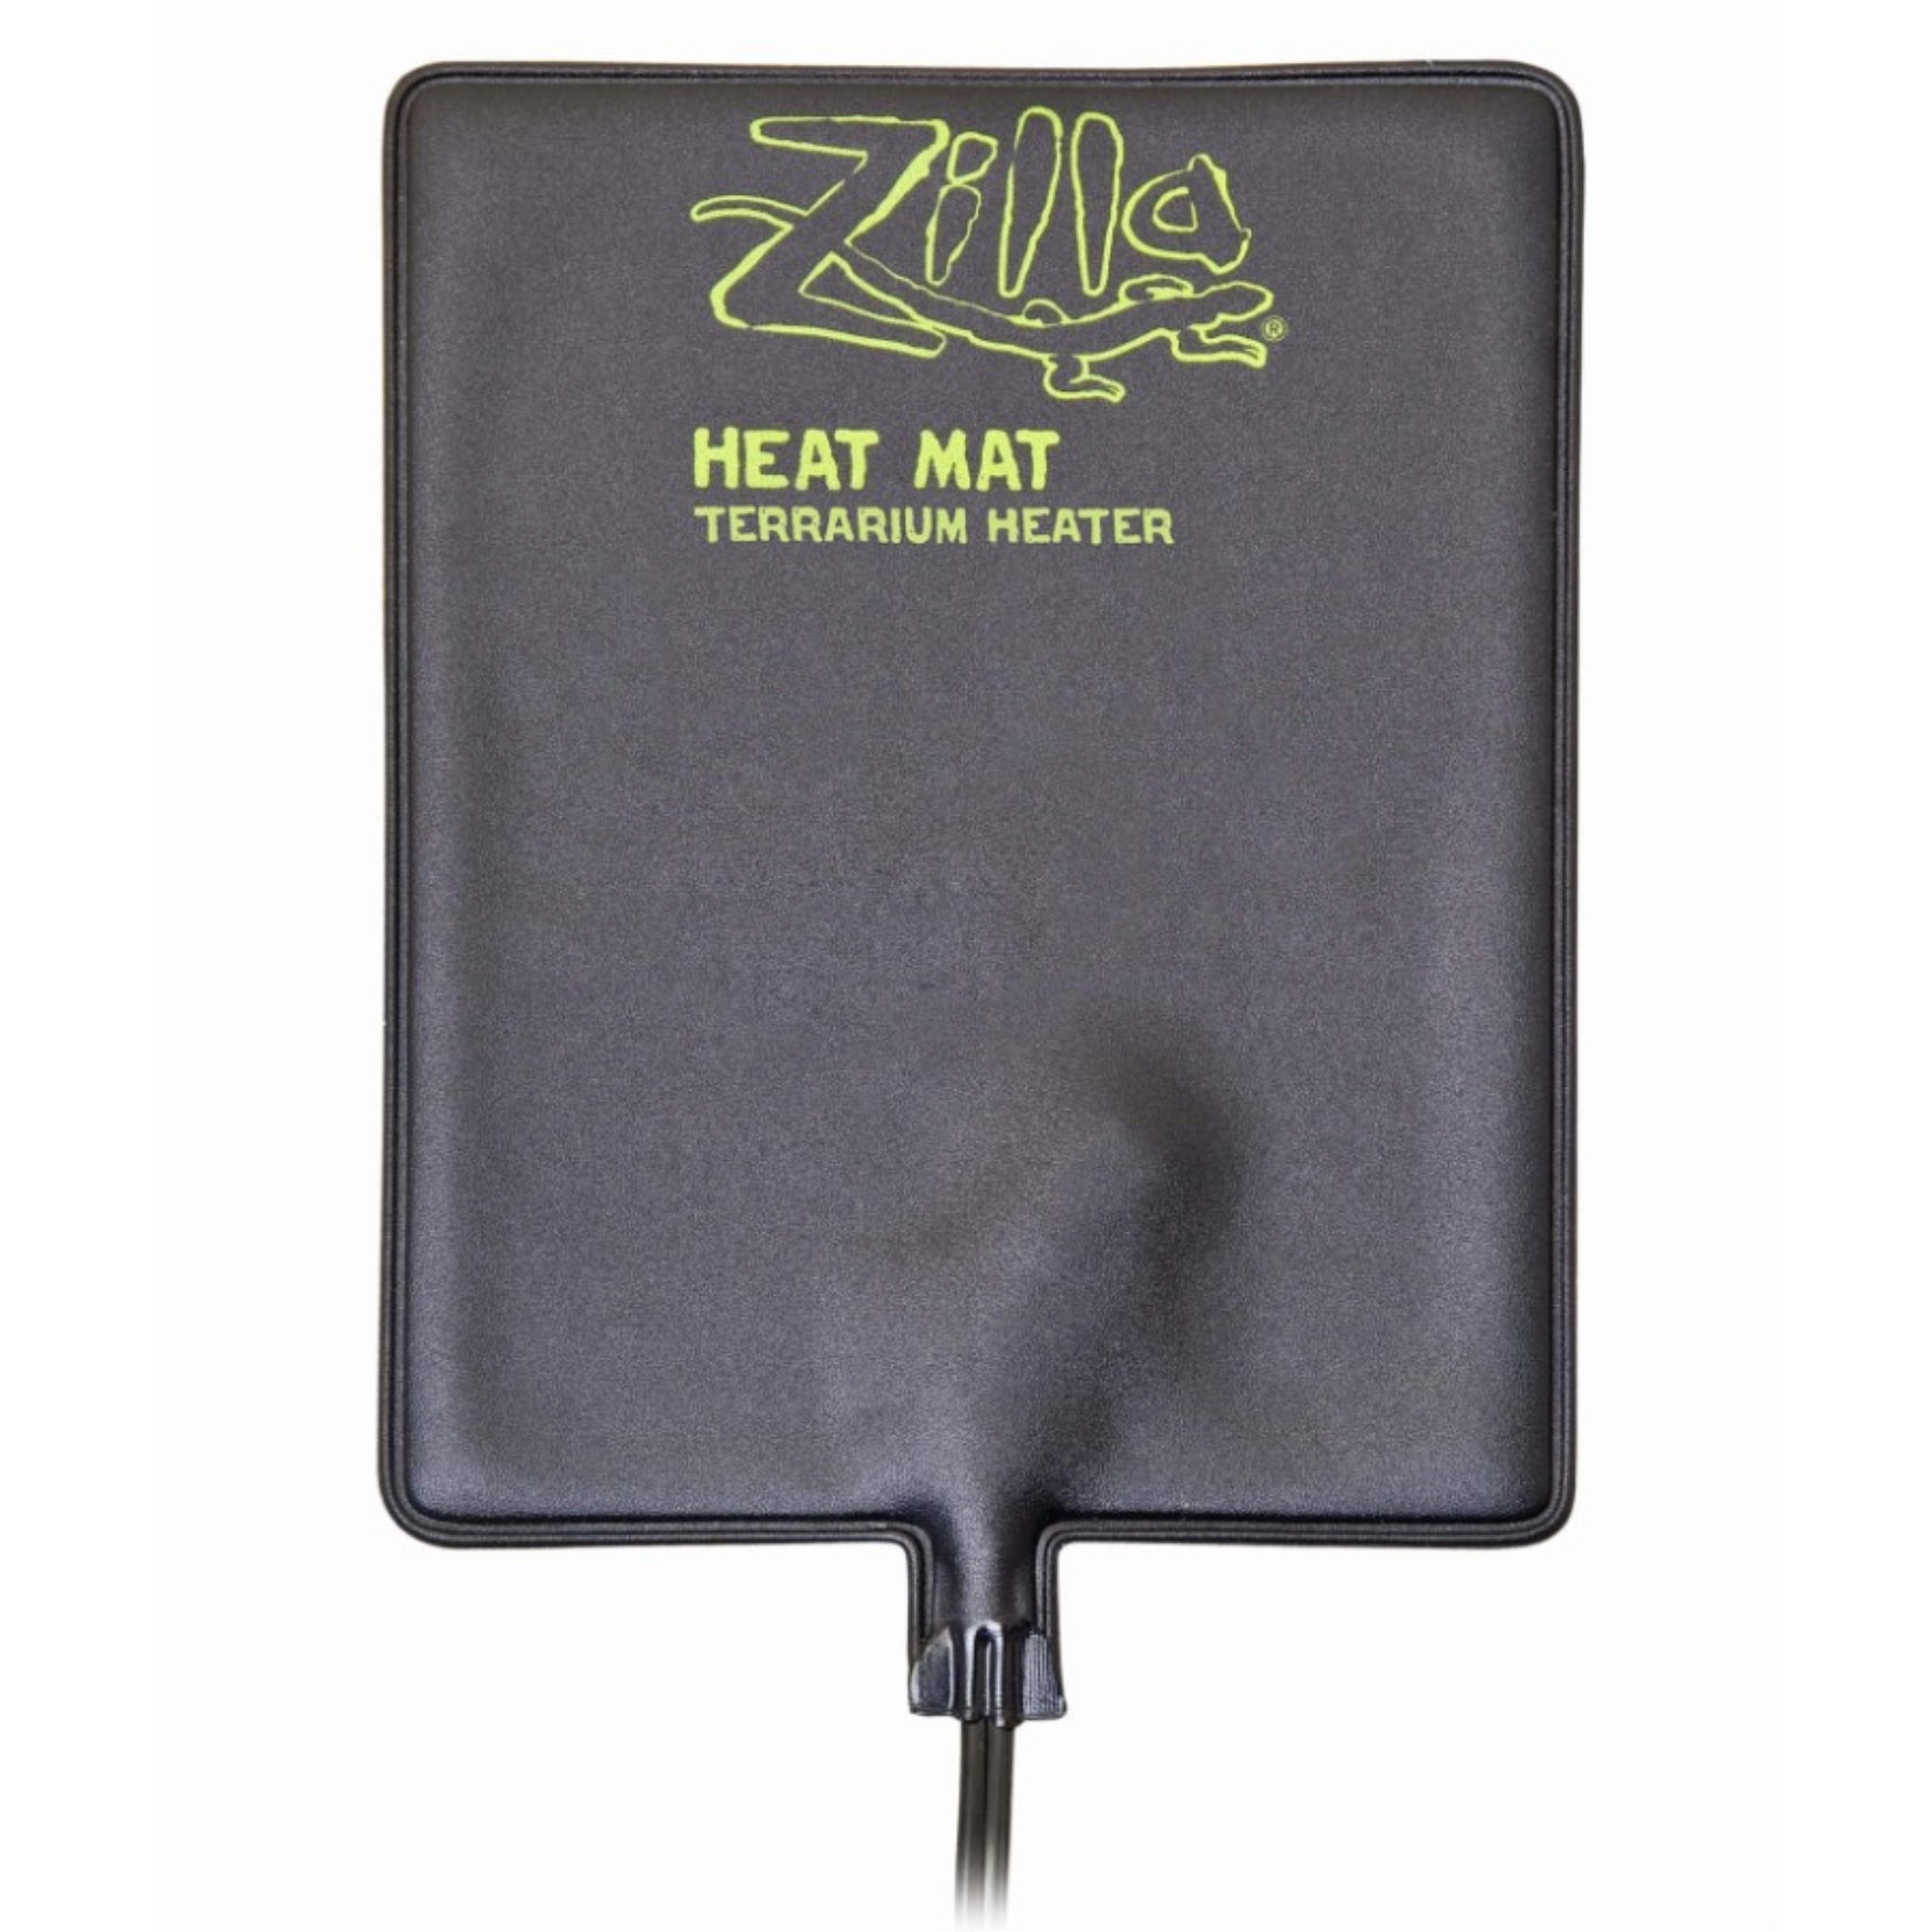 Zilla Heat Mat Terrarium Heater, Black, Small, 10-20 Gallon, 8-Watt, 6 x 8.5 Inches